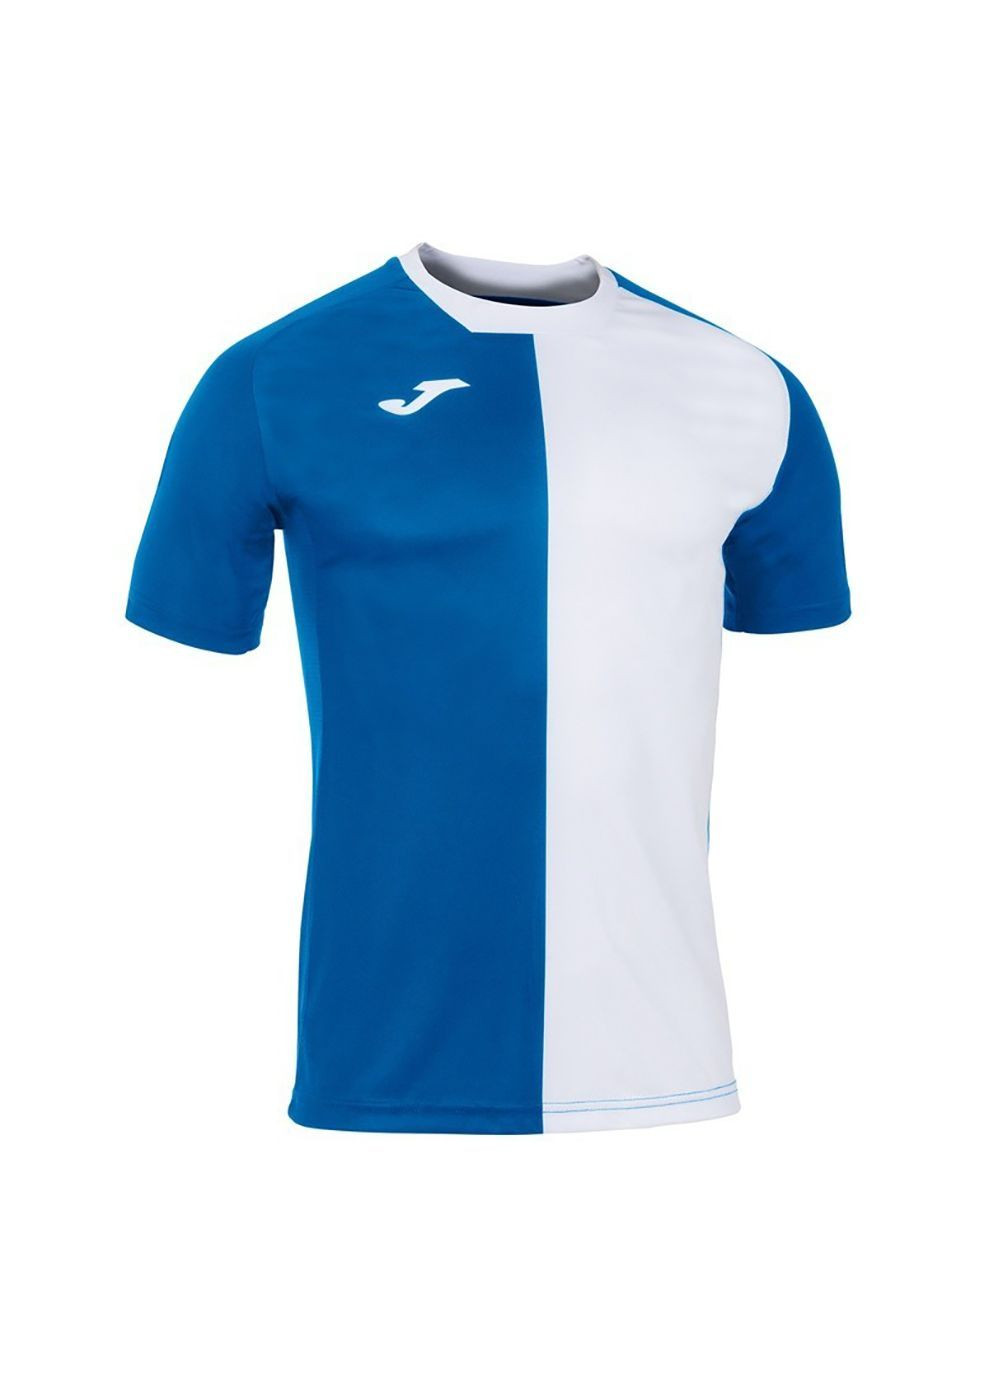 Белая футболка city t-shirt royal-white s/s синий,белый-3xl Joma